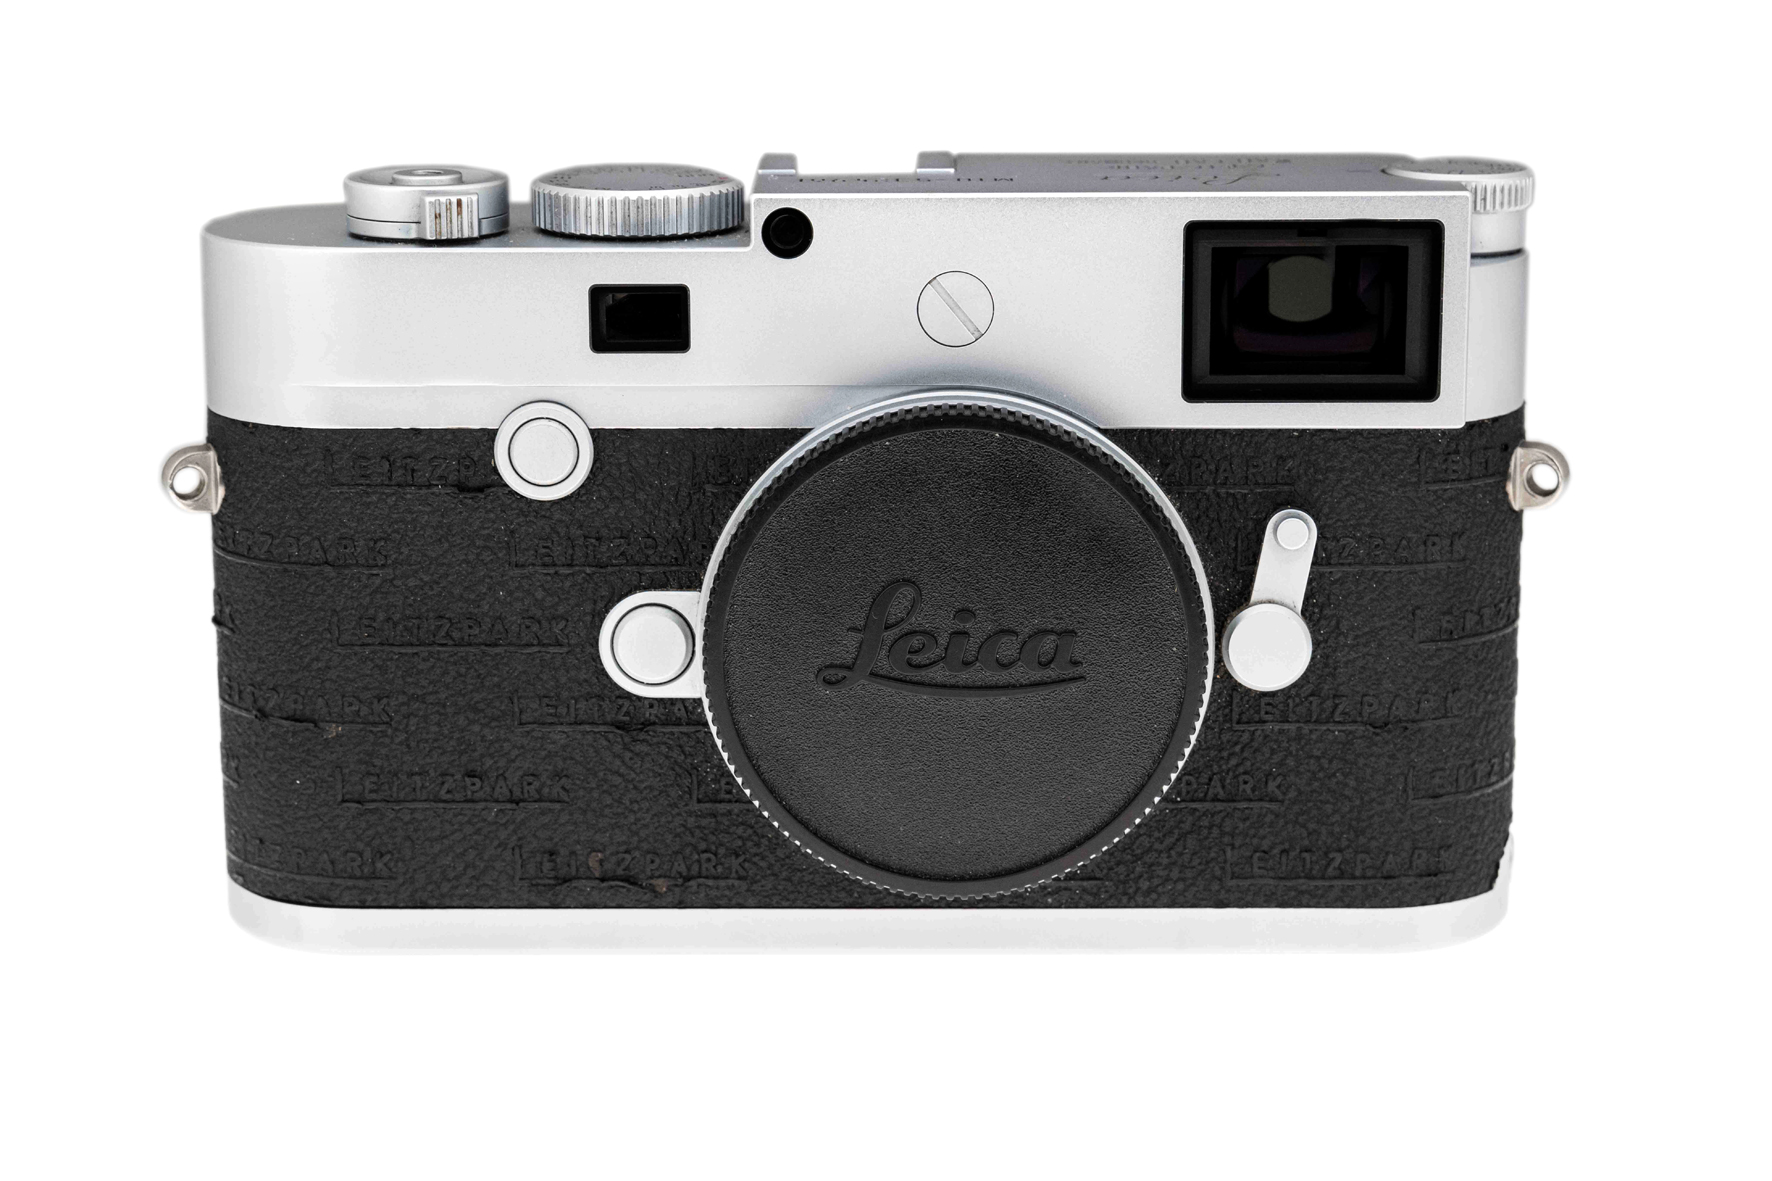 Leica M10 Leitzpark Edition silbern